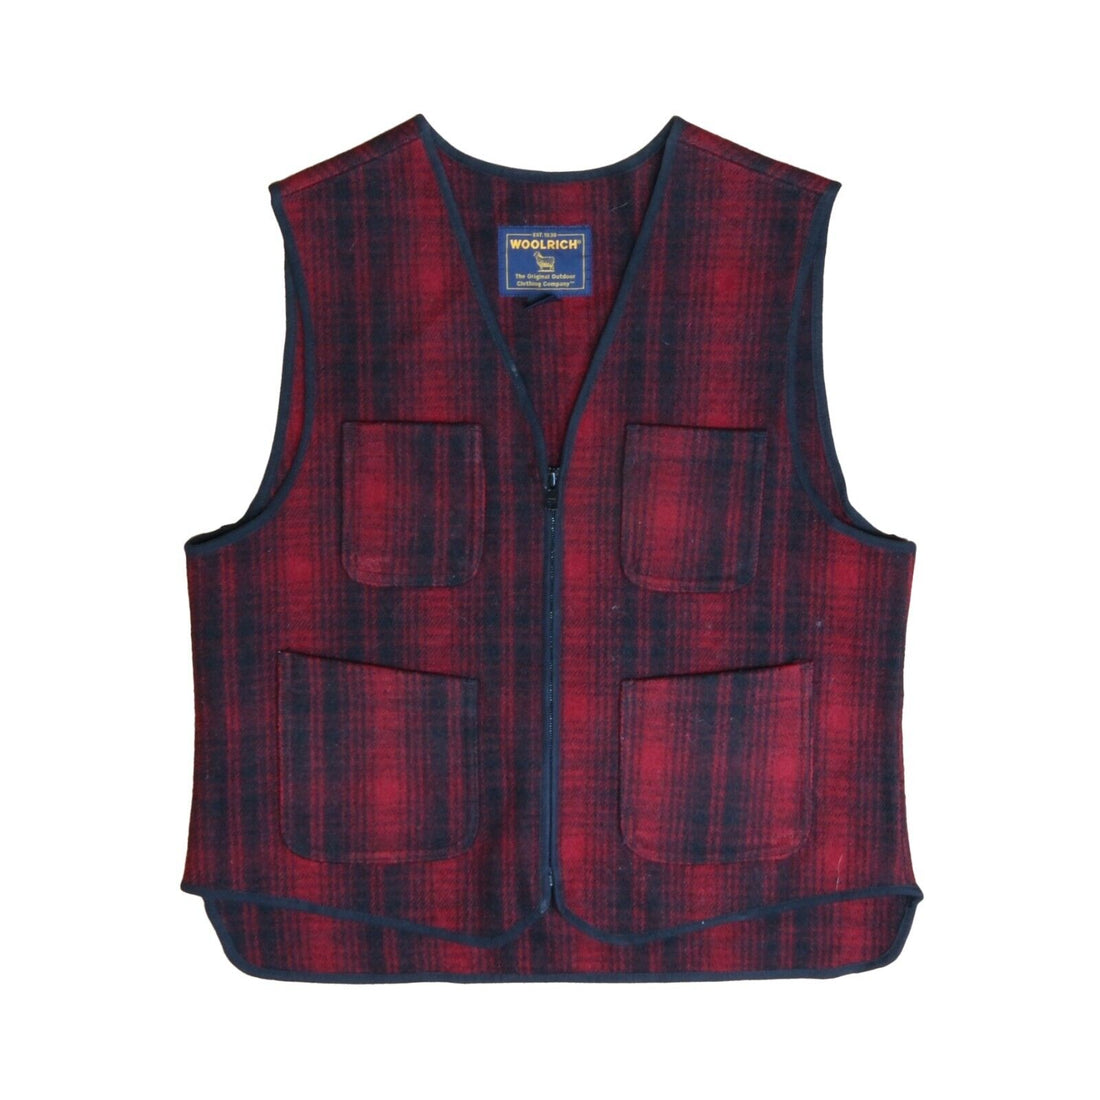 Vintage Woolrich Wool Vest Jacket Size Medium Red Plaid